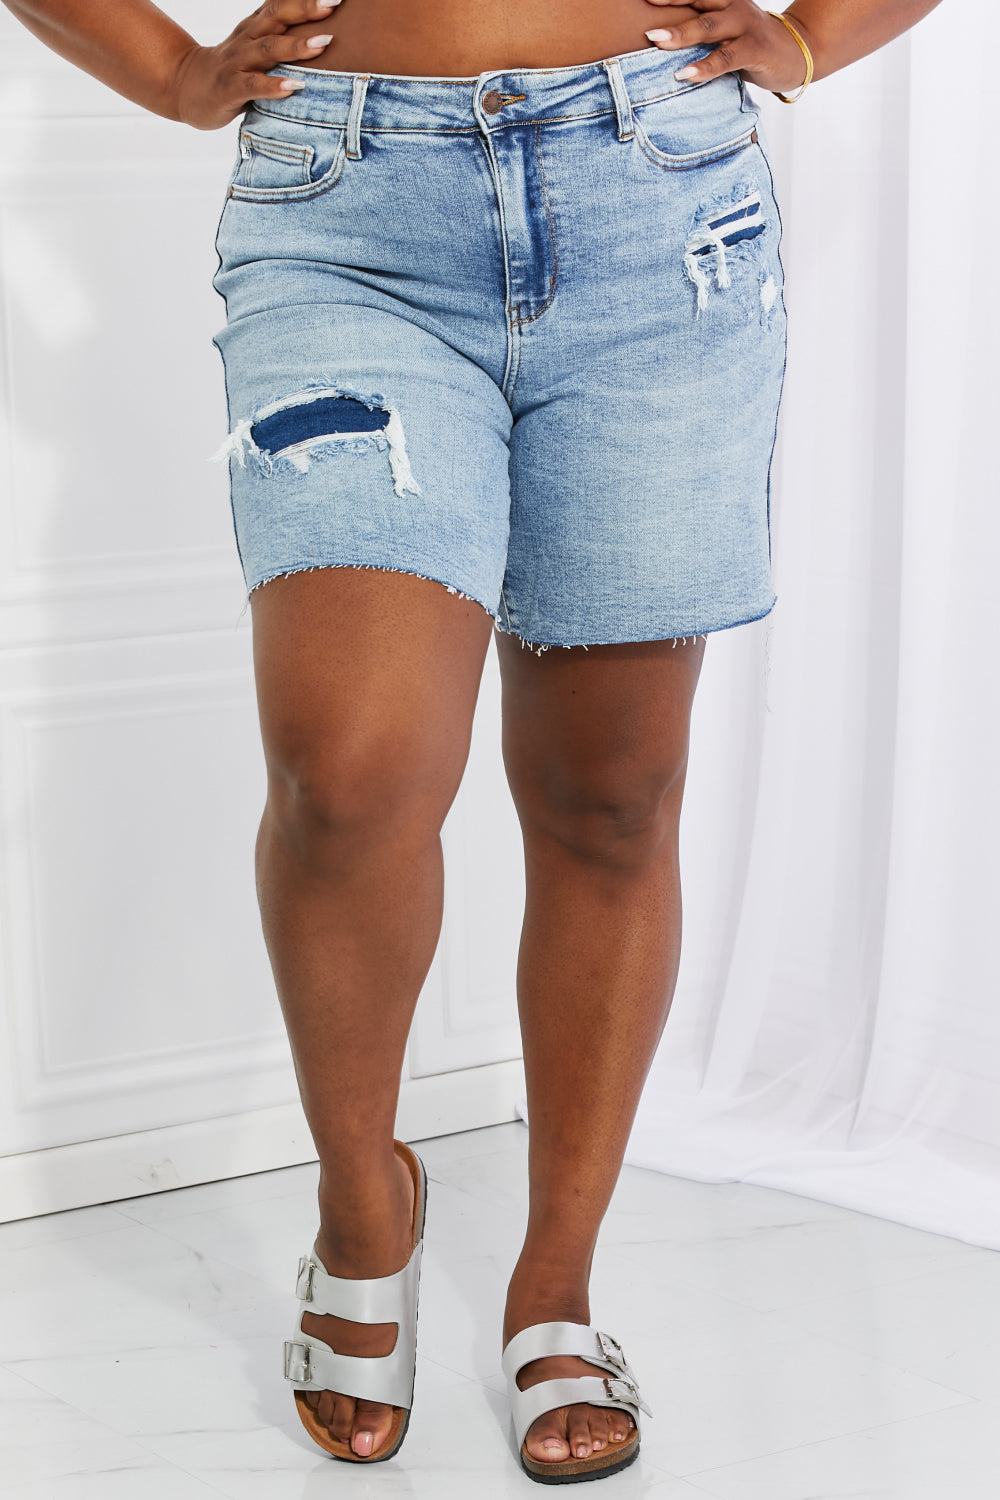 Judy Blue Mid-Length Denim Patch Shorts - AnnRose Boutique